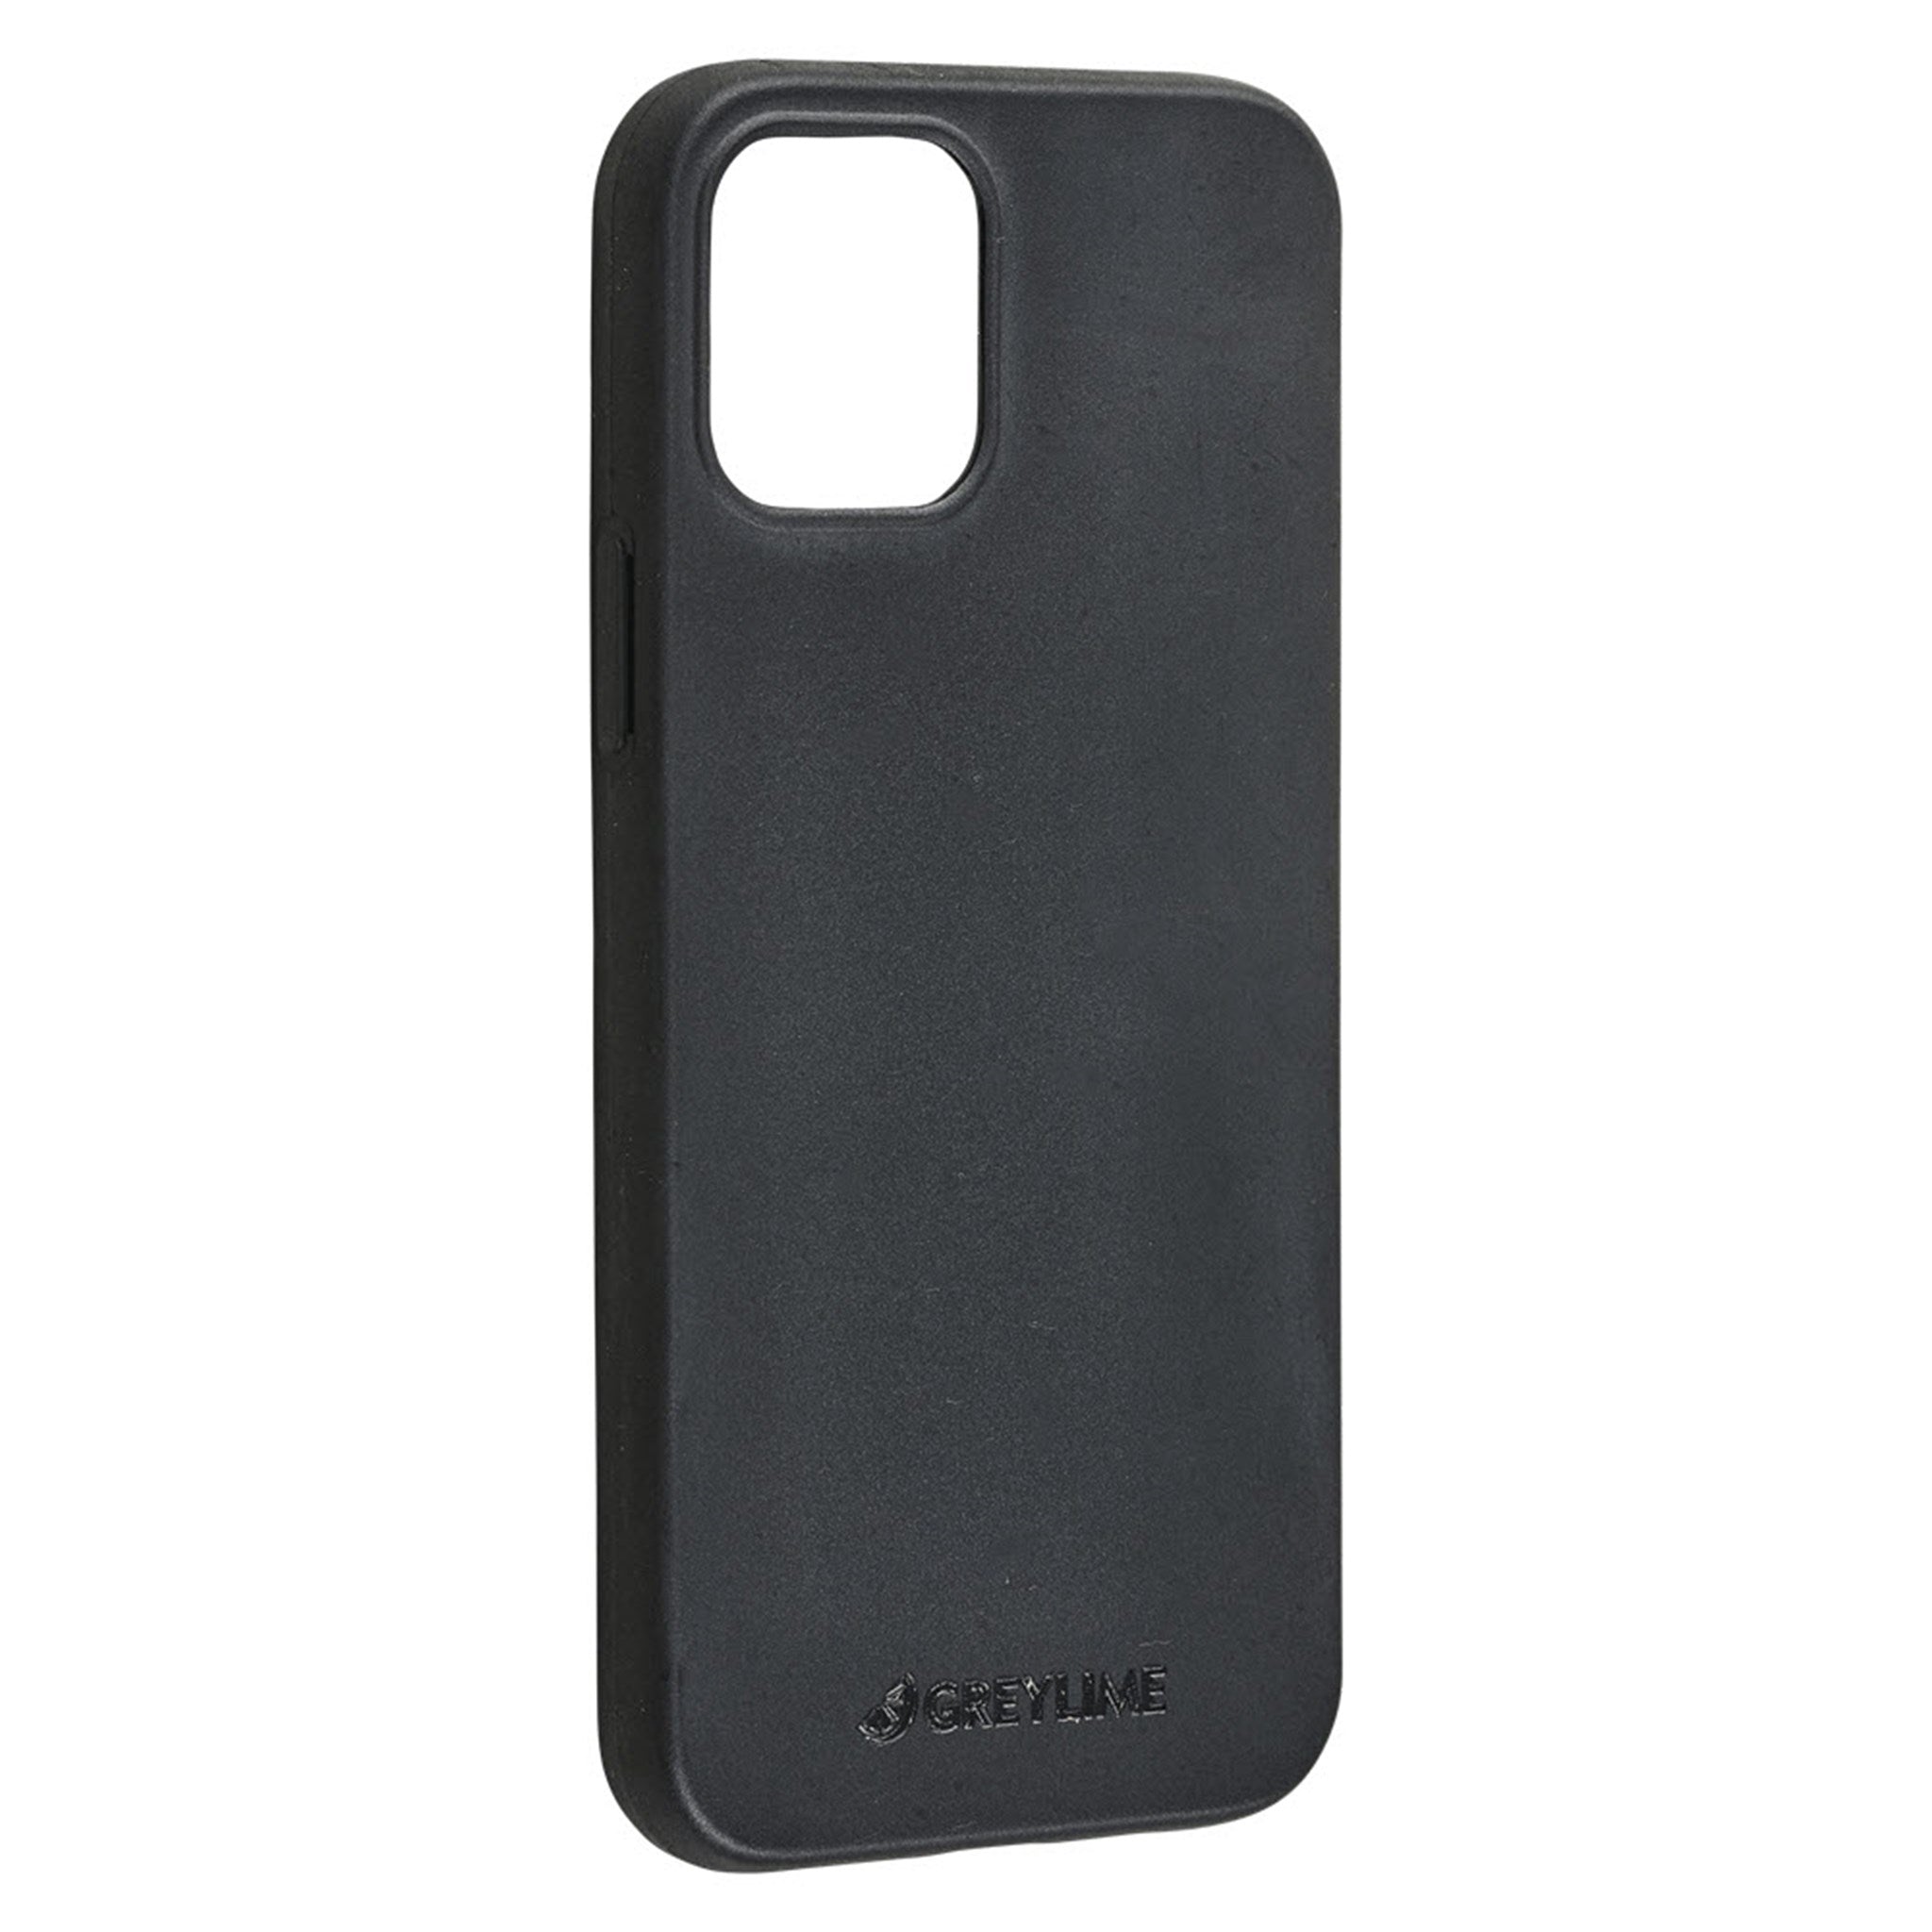 GreyLime-iPhone-12-12-Pro-Biodegdrable-Cover-Black-COIP12M01-V1.jpg